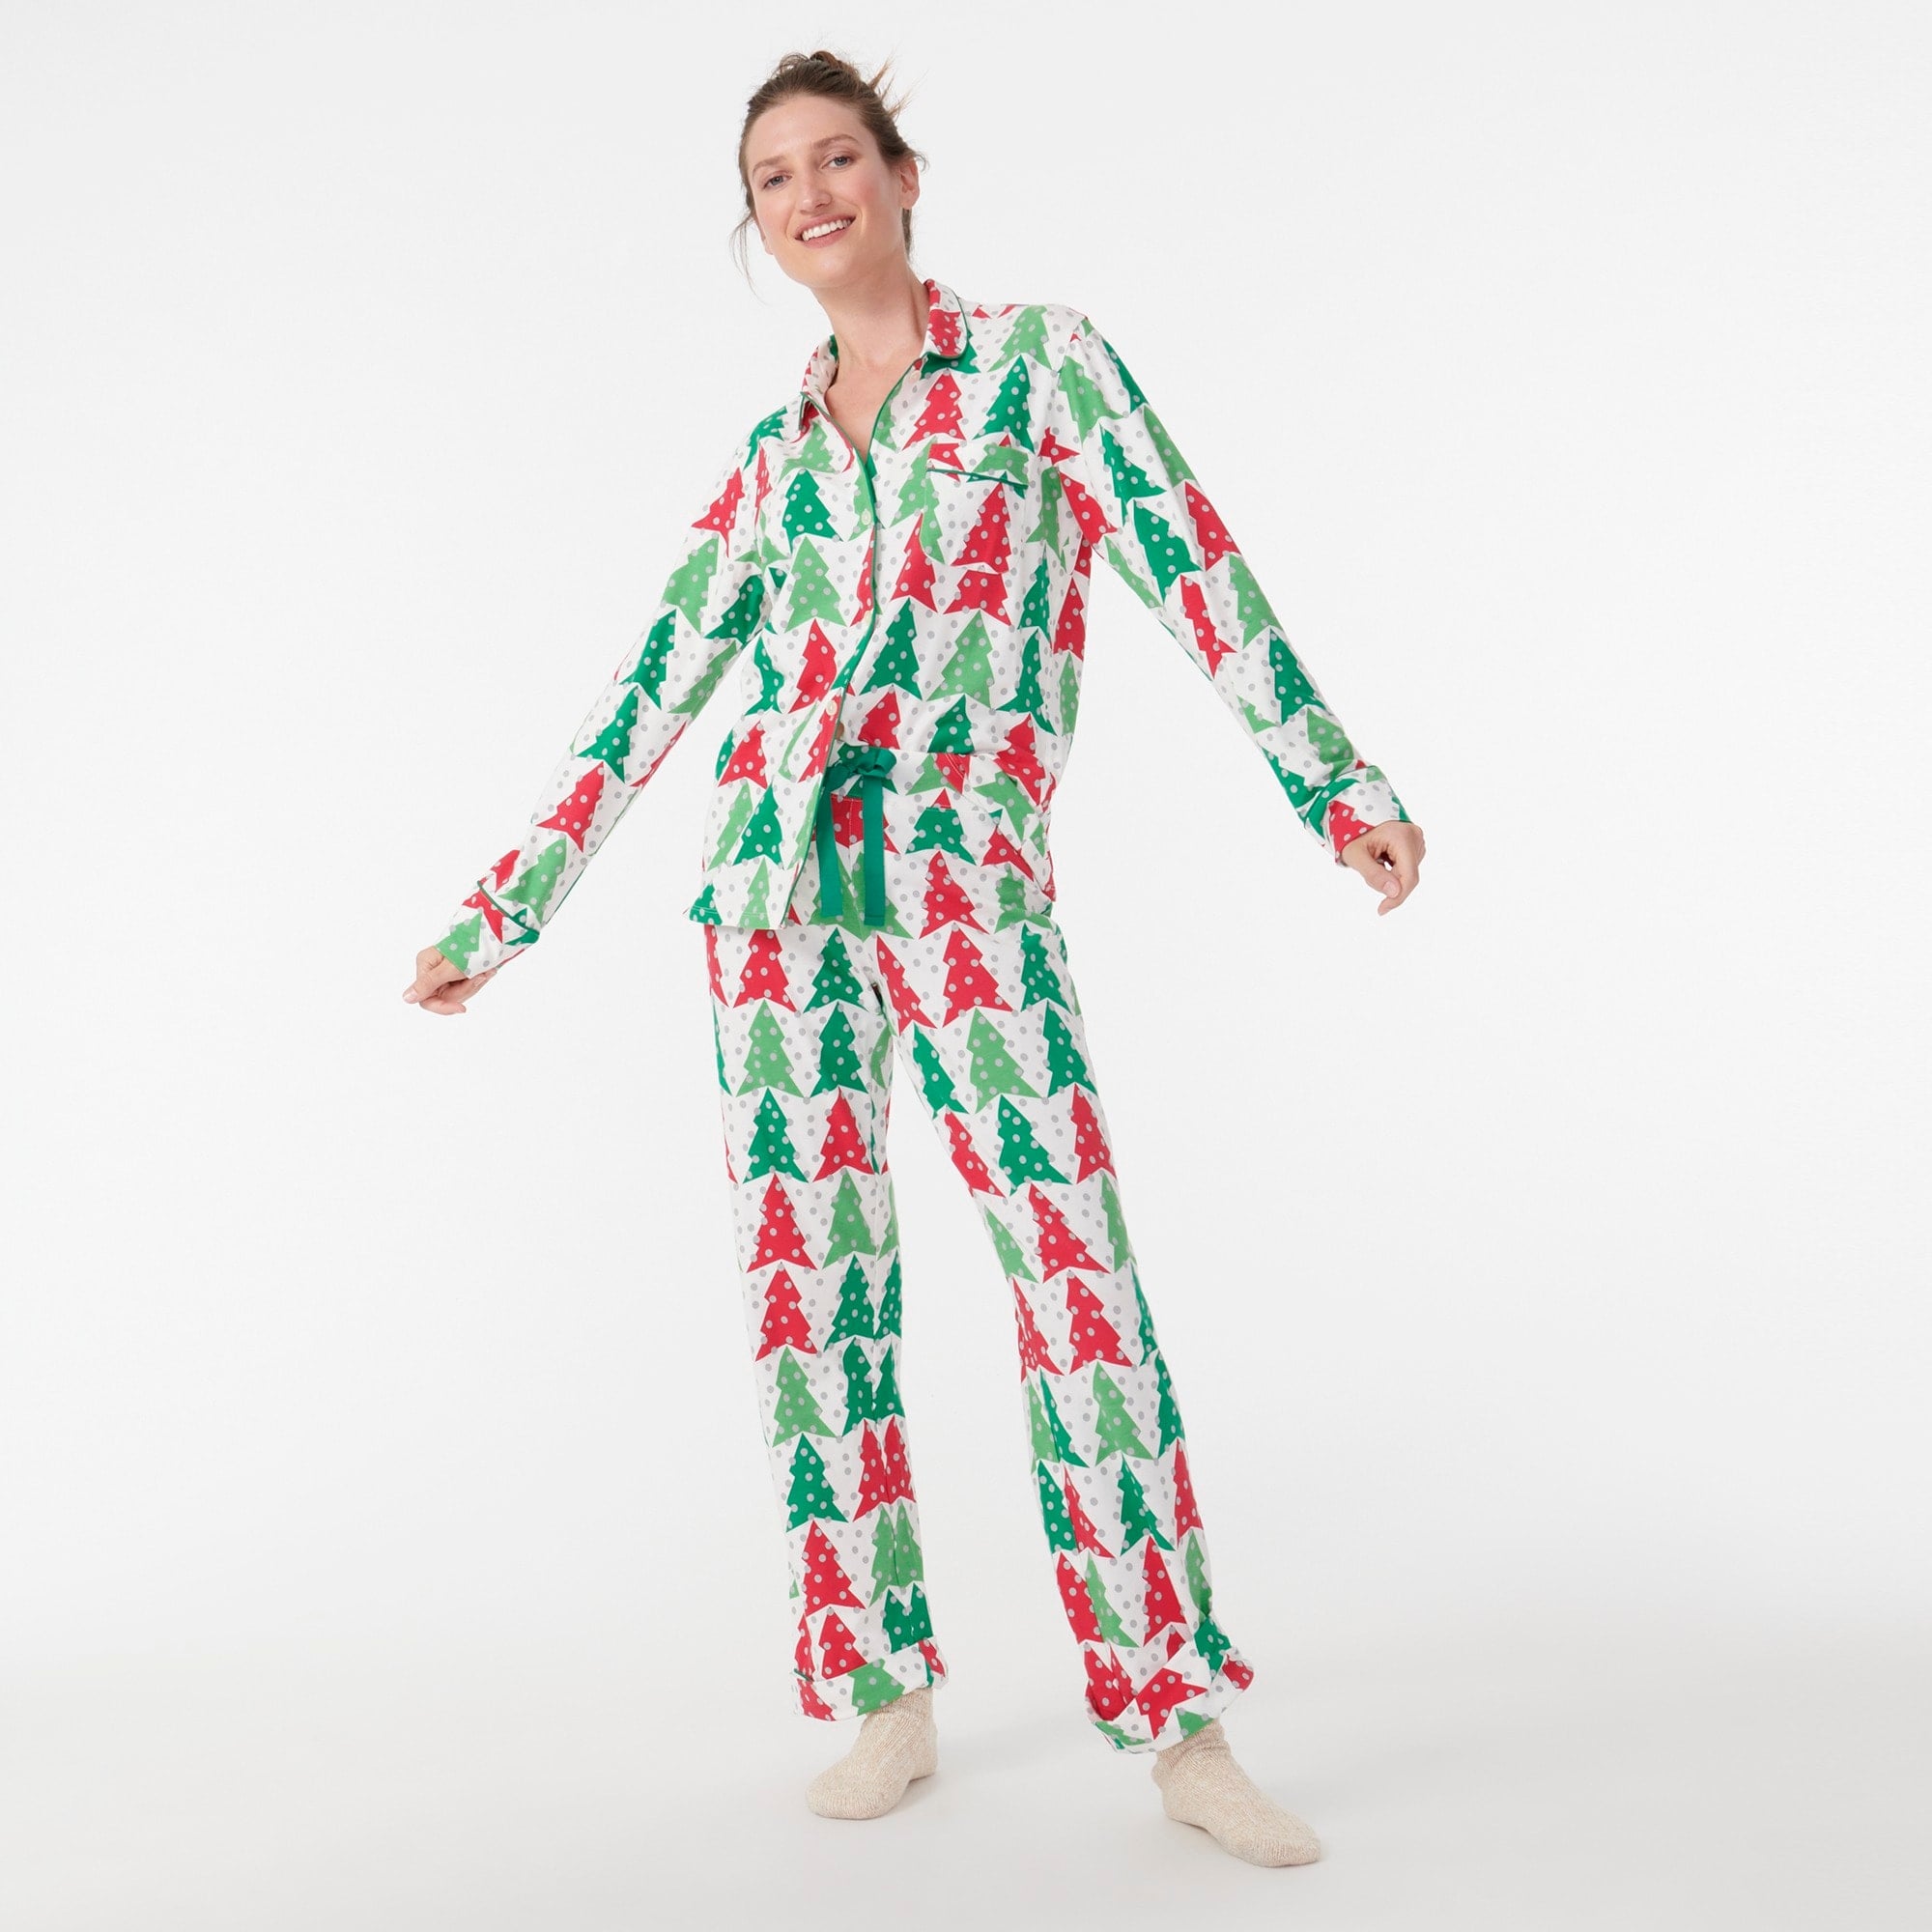 J Crew NWT Festive Trees Knit Pajama Set size S,M,L  #AT567 $89.50  H 2020 